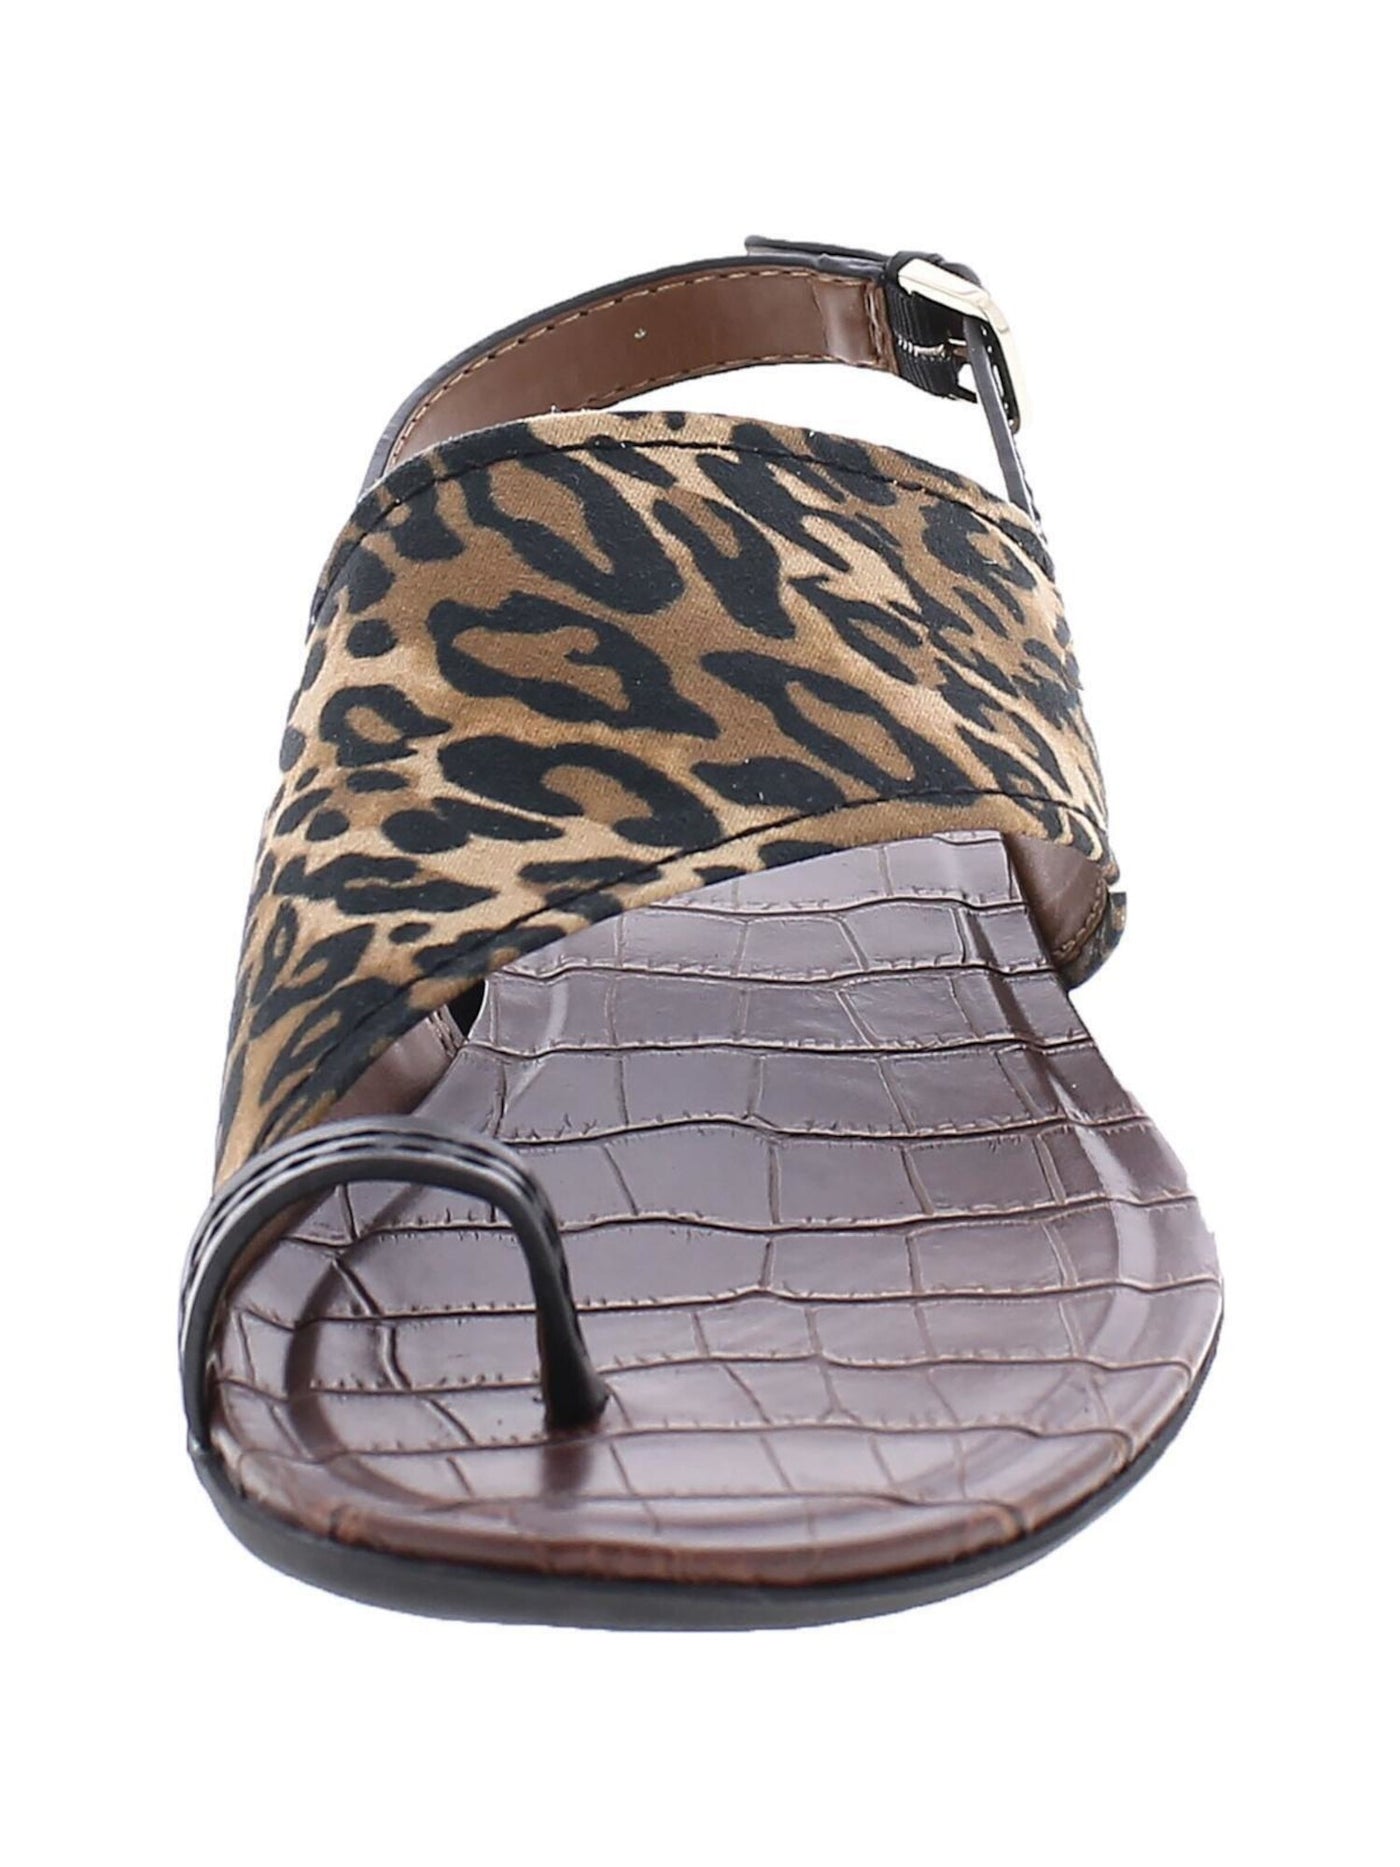 NATURALIZER Womens Brown Cheetah Print Adjustable Strap Comfort Seanna Round Toe Block Heel Buckle Slingback Sandal 11 M